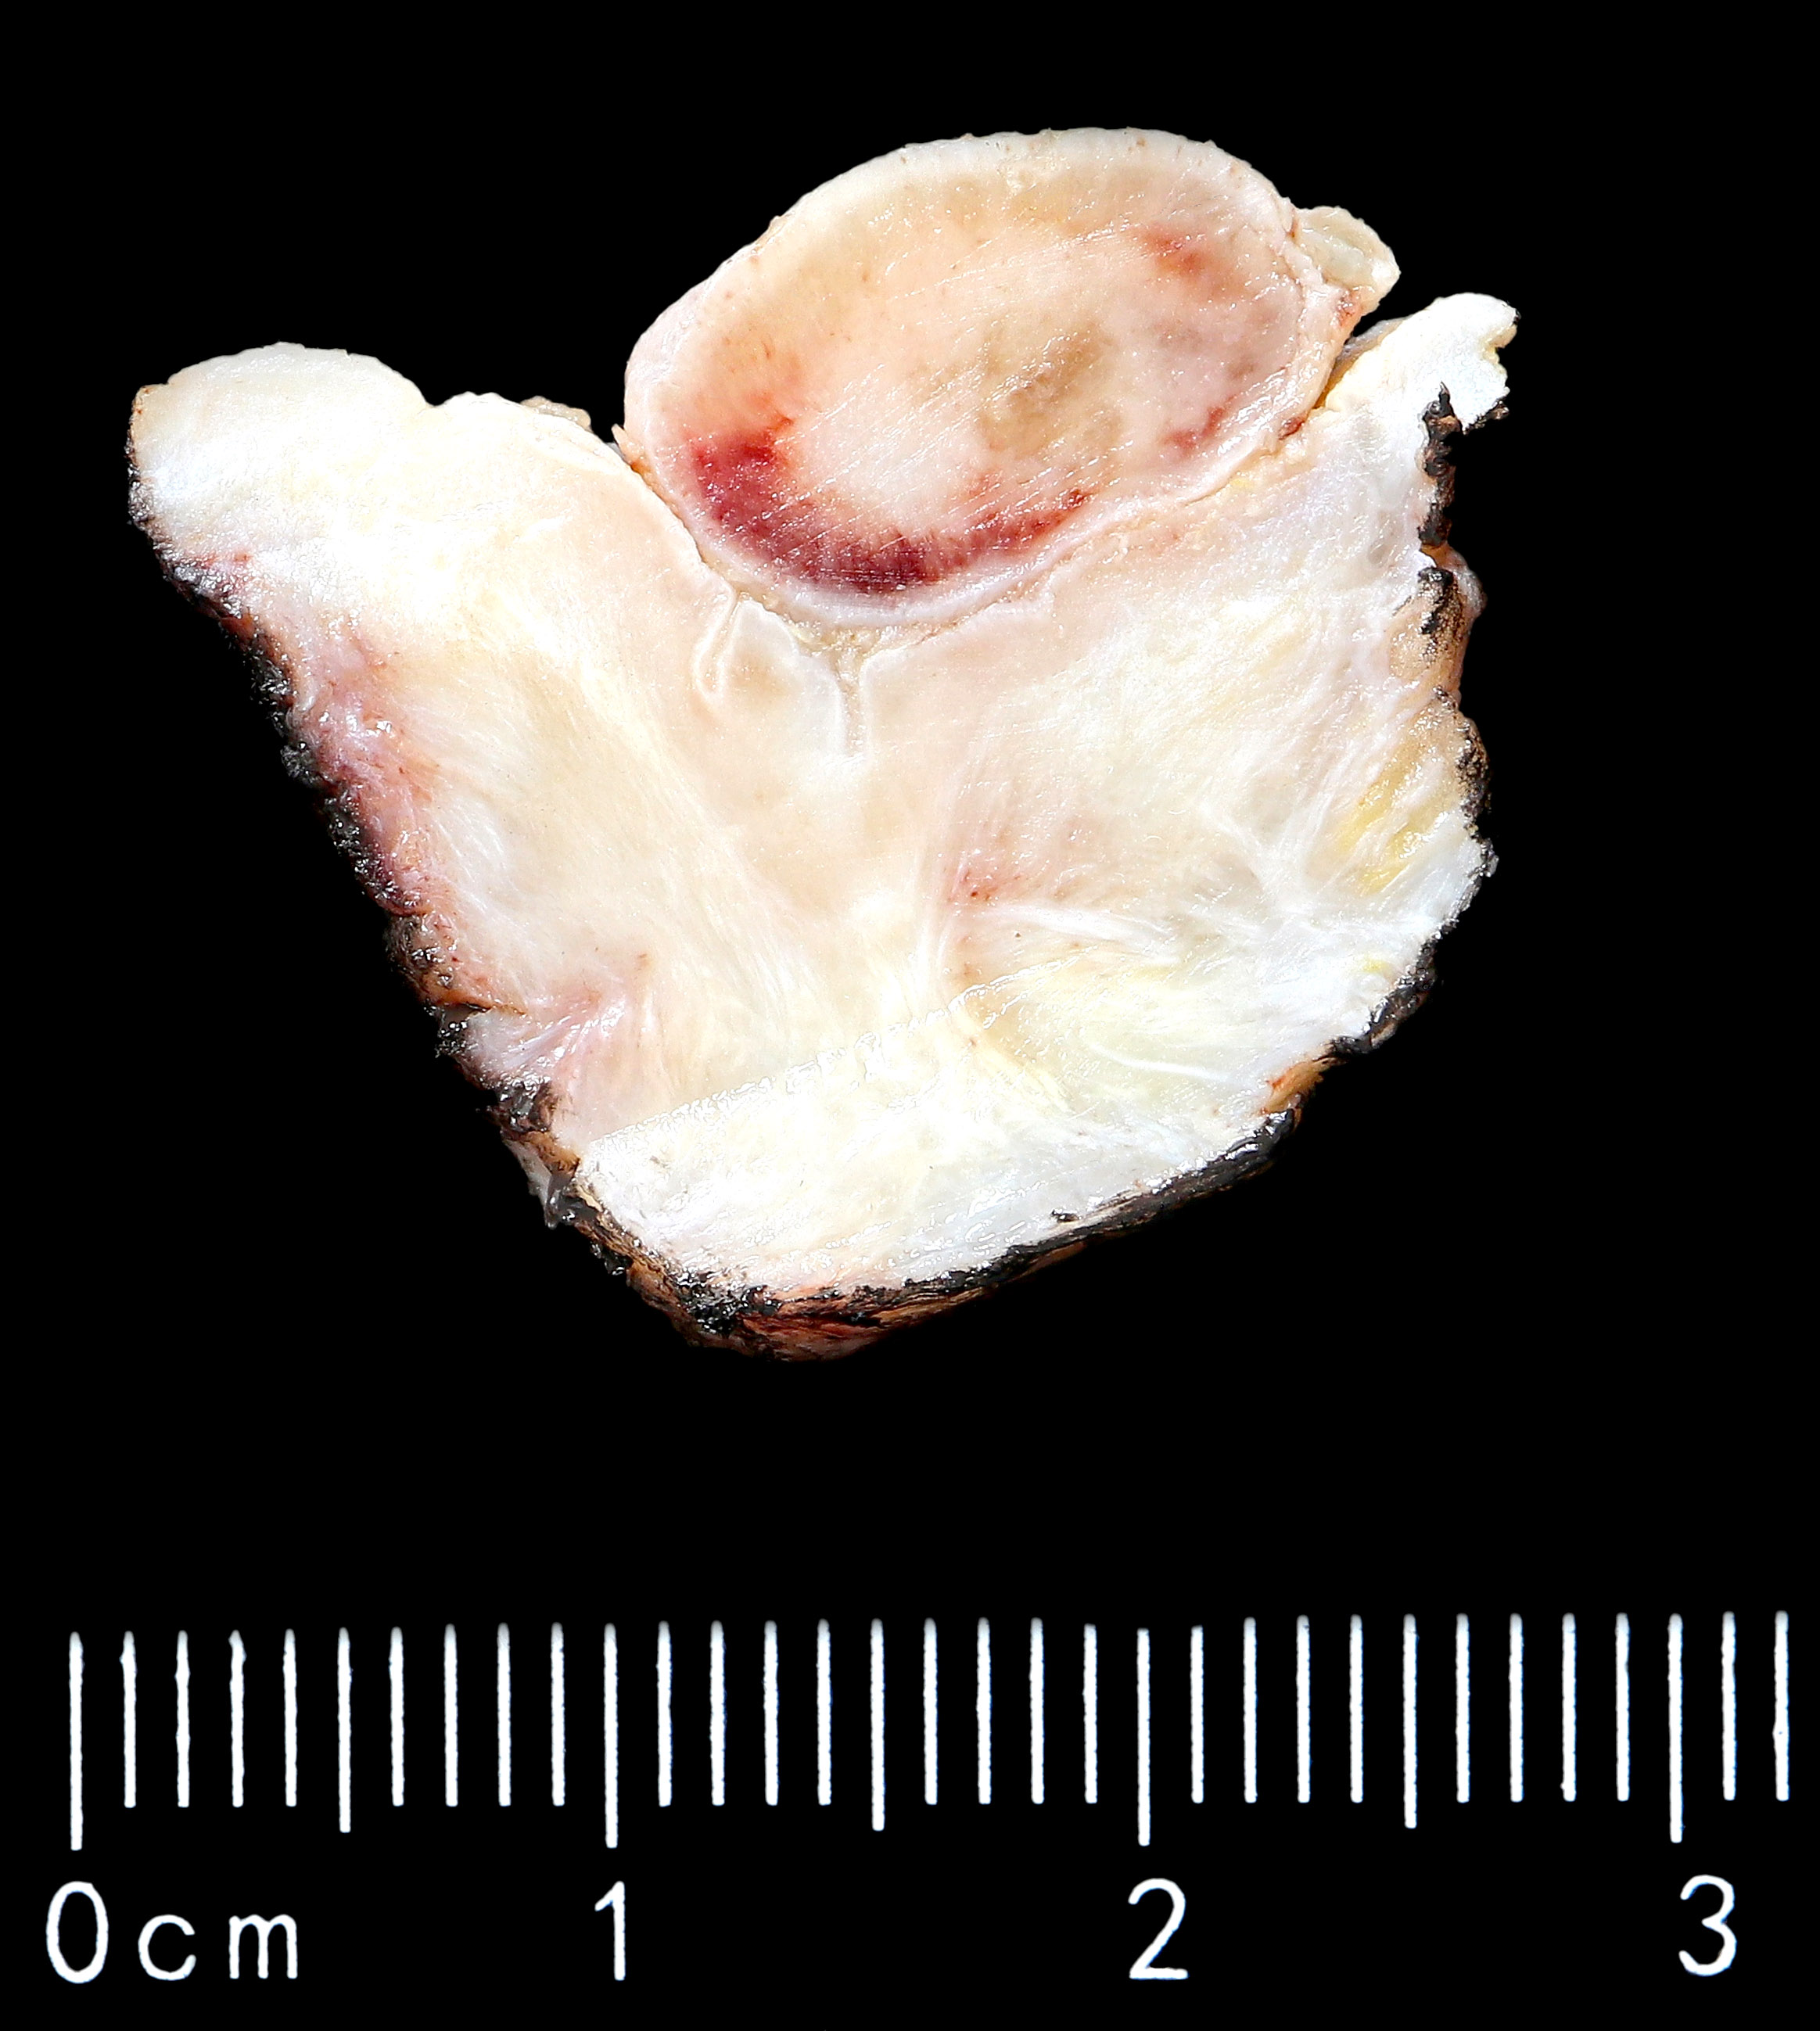 Intestinal type adenocarcinoma